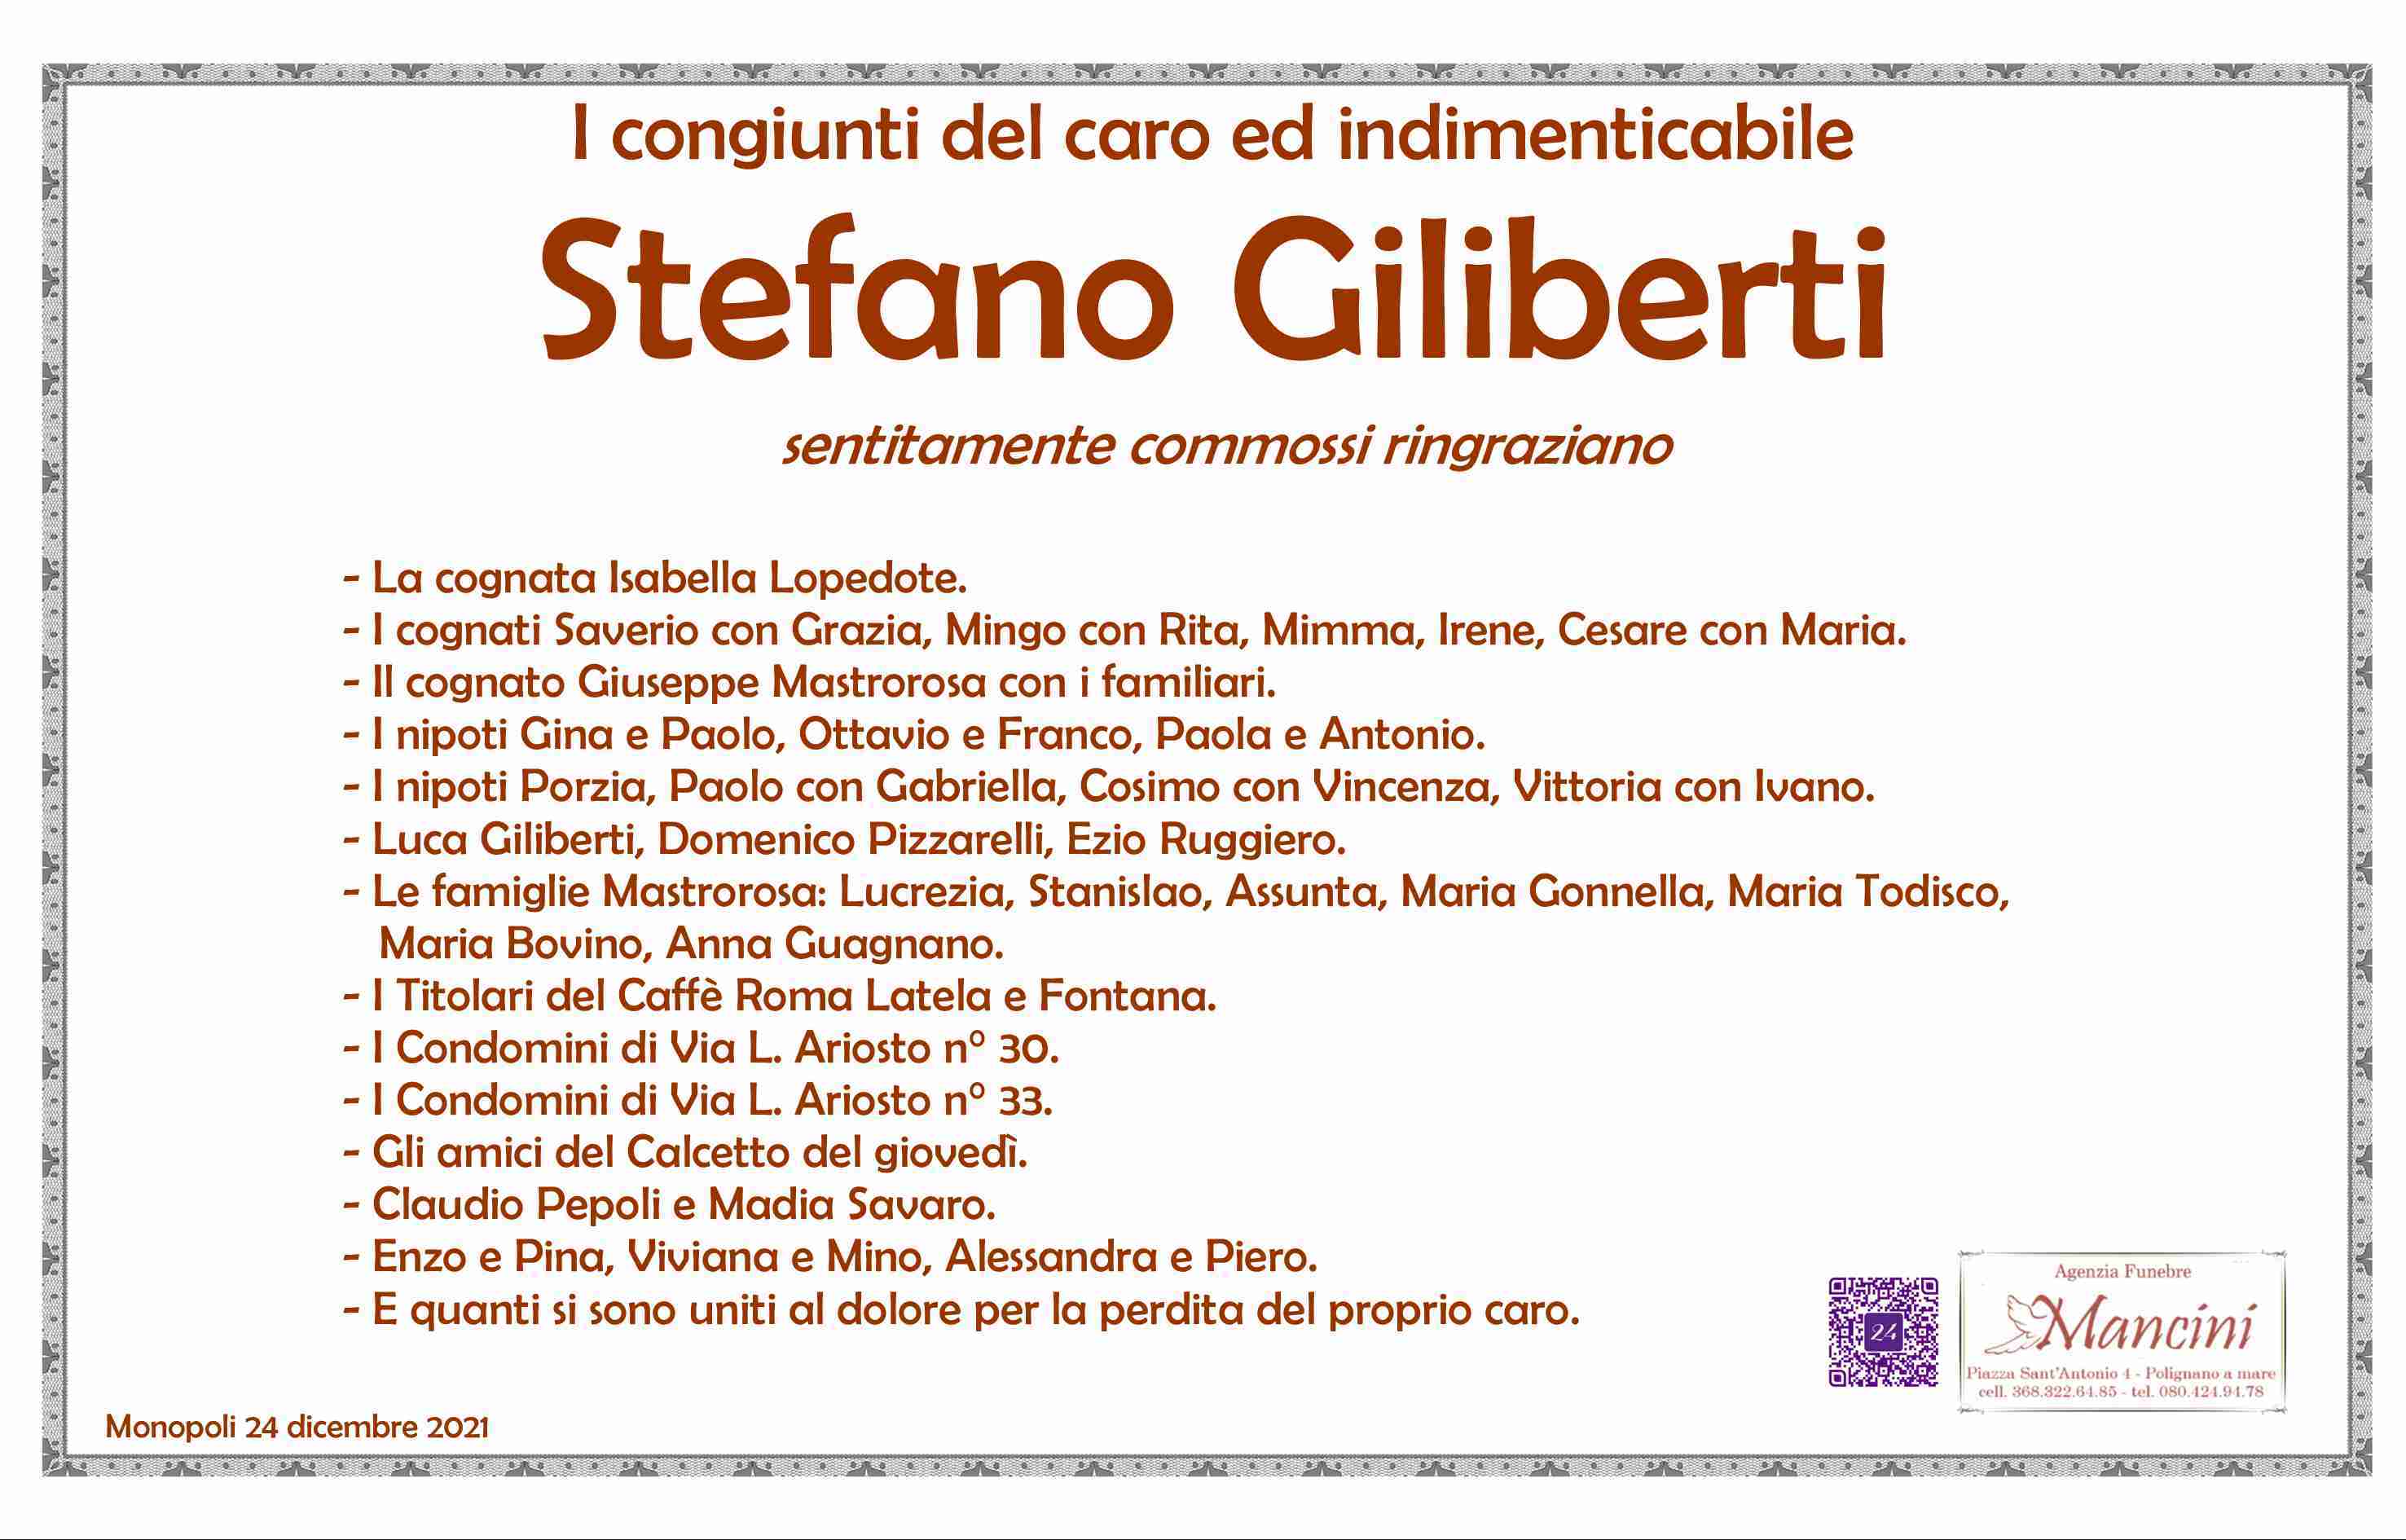 Stefano Giliberti